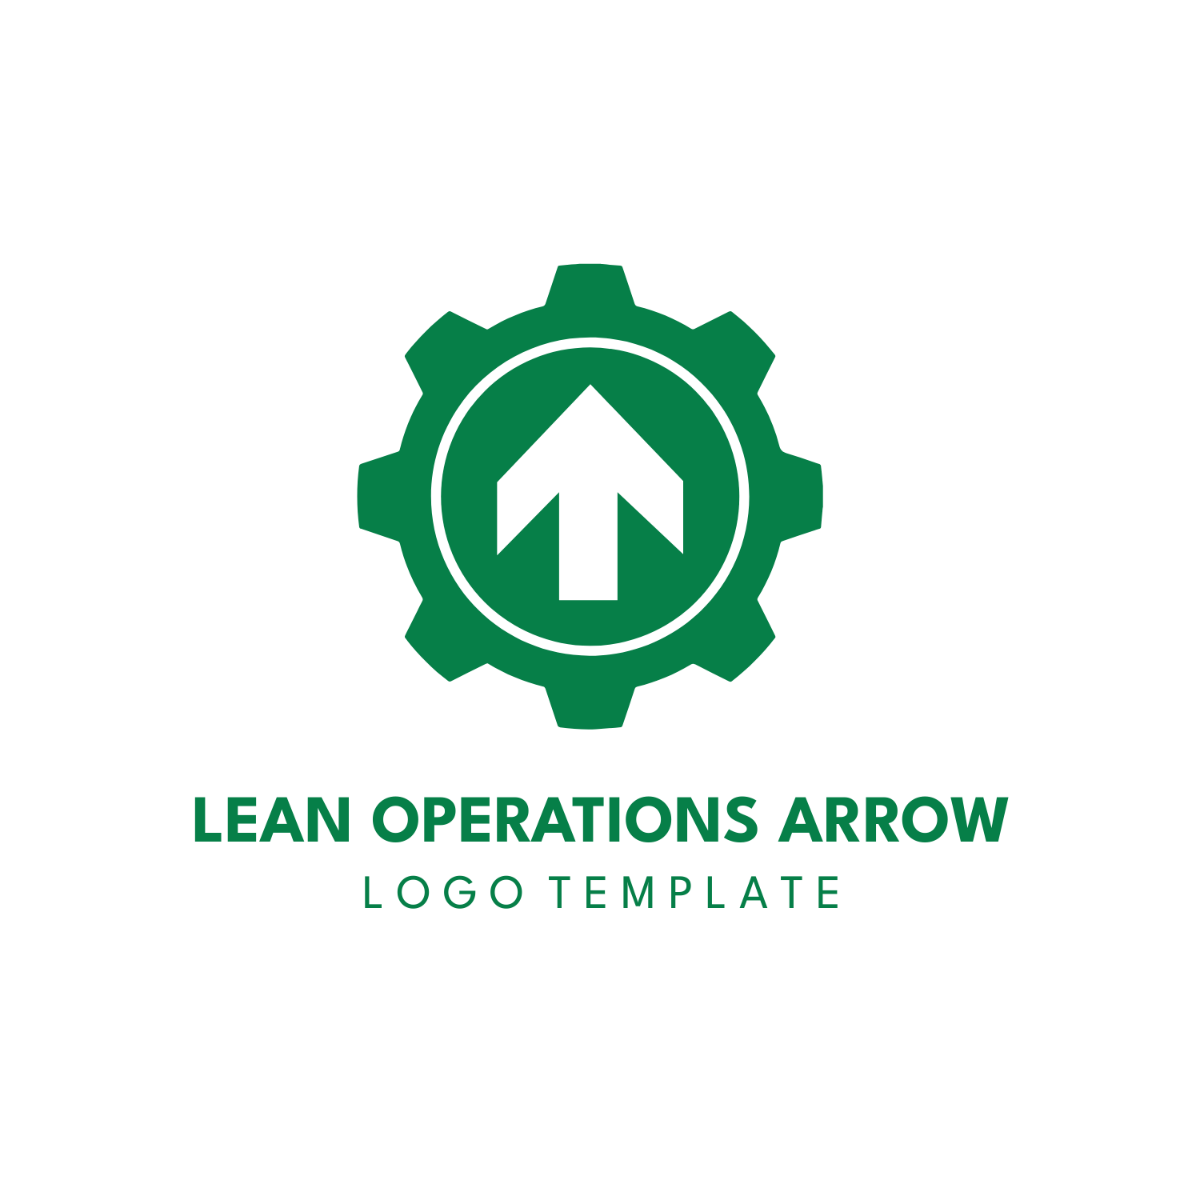 Lean Operations Arrow Logo Template